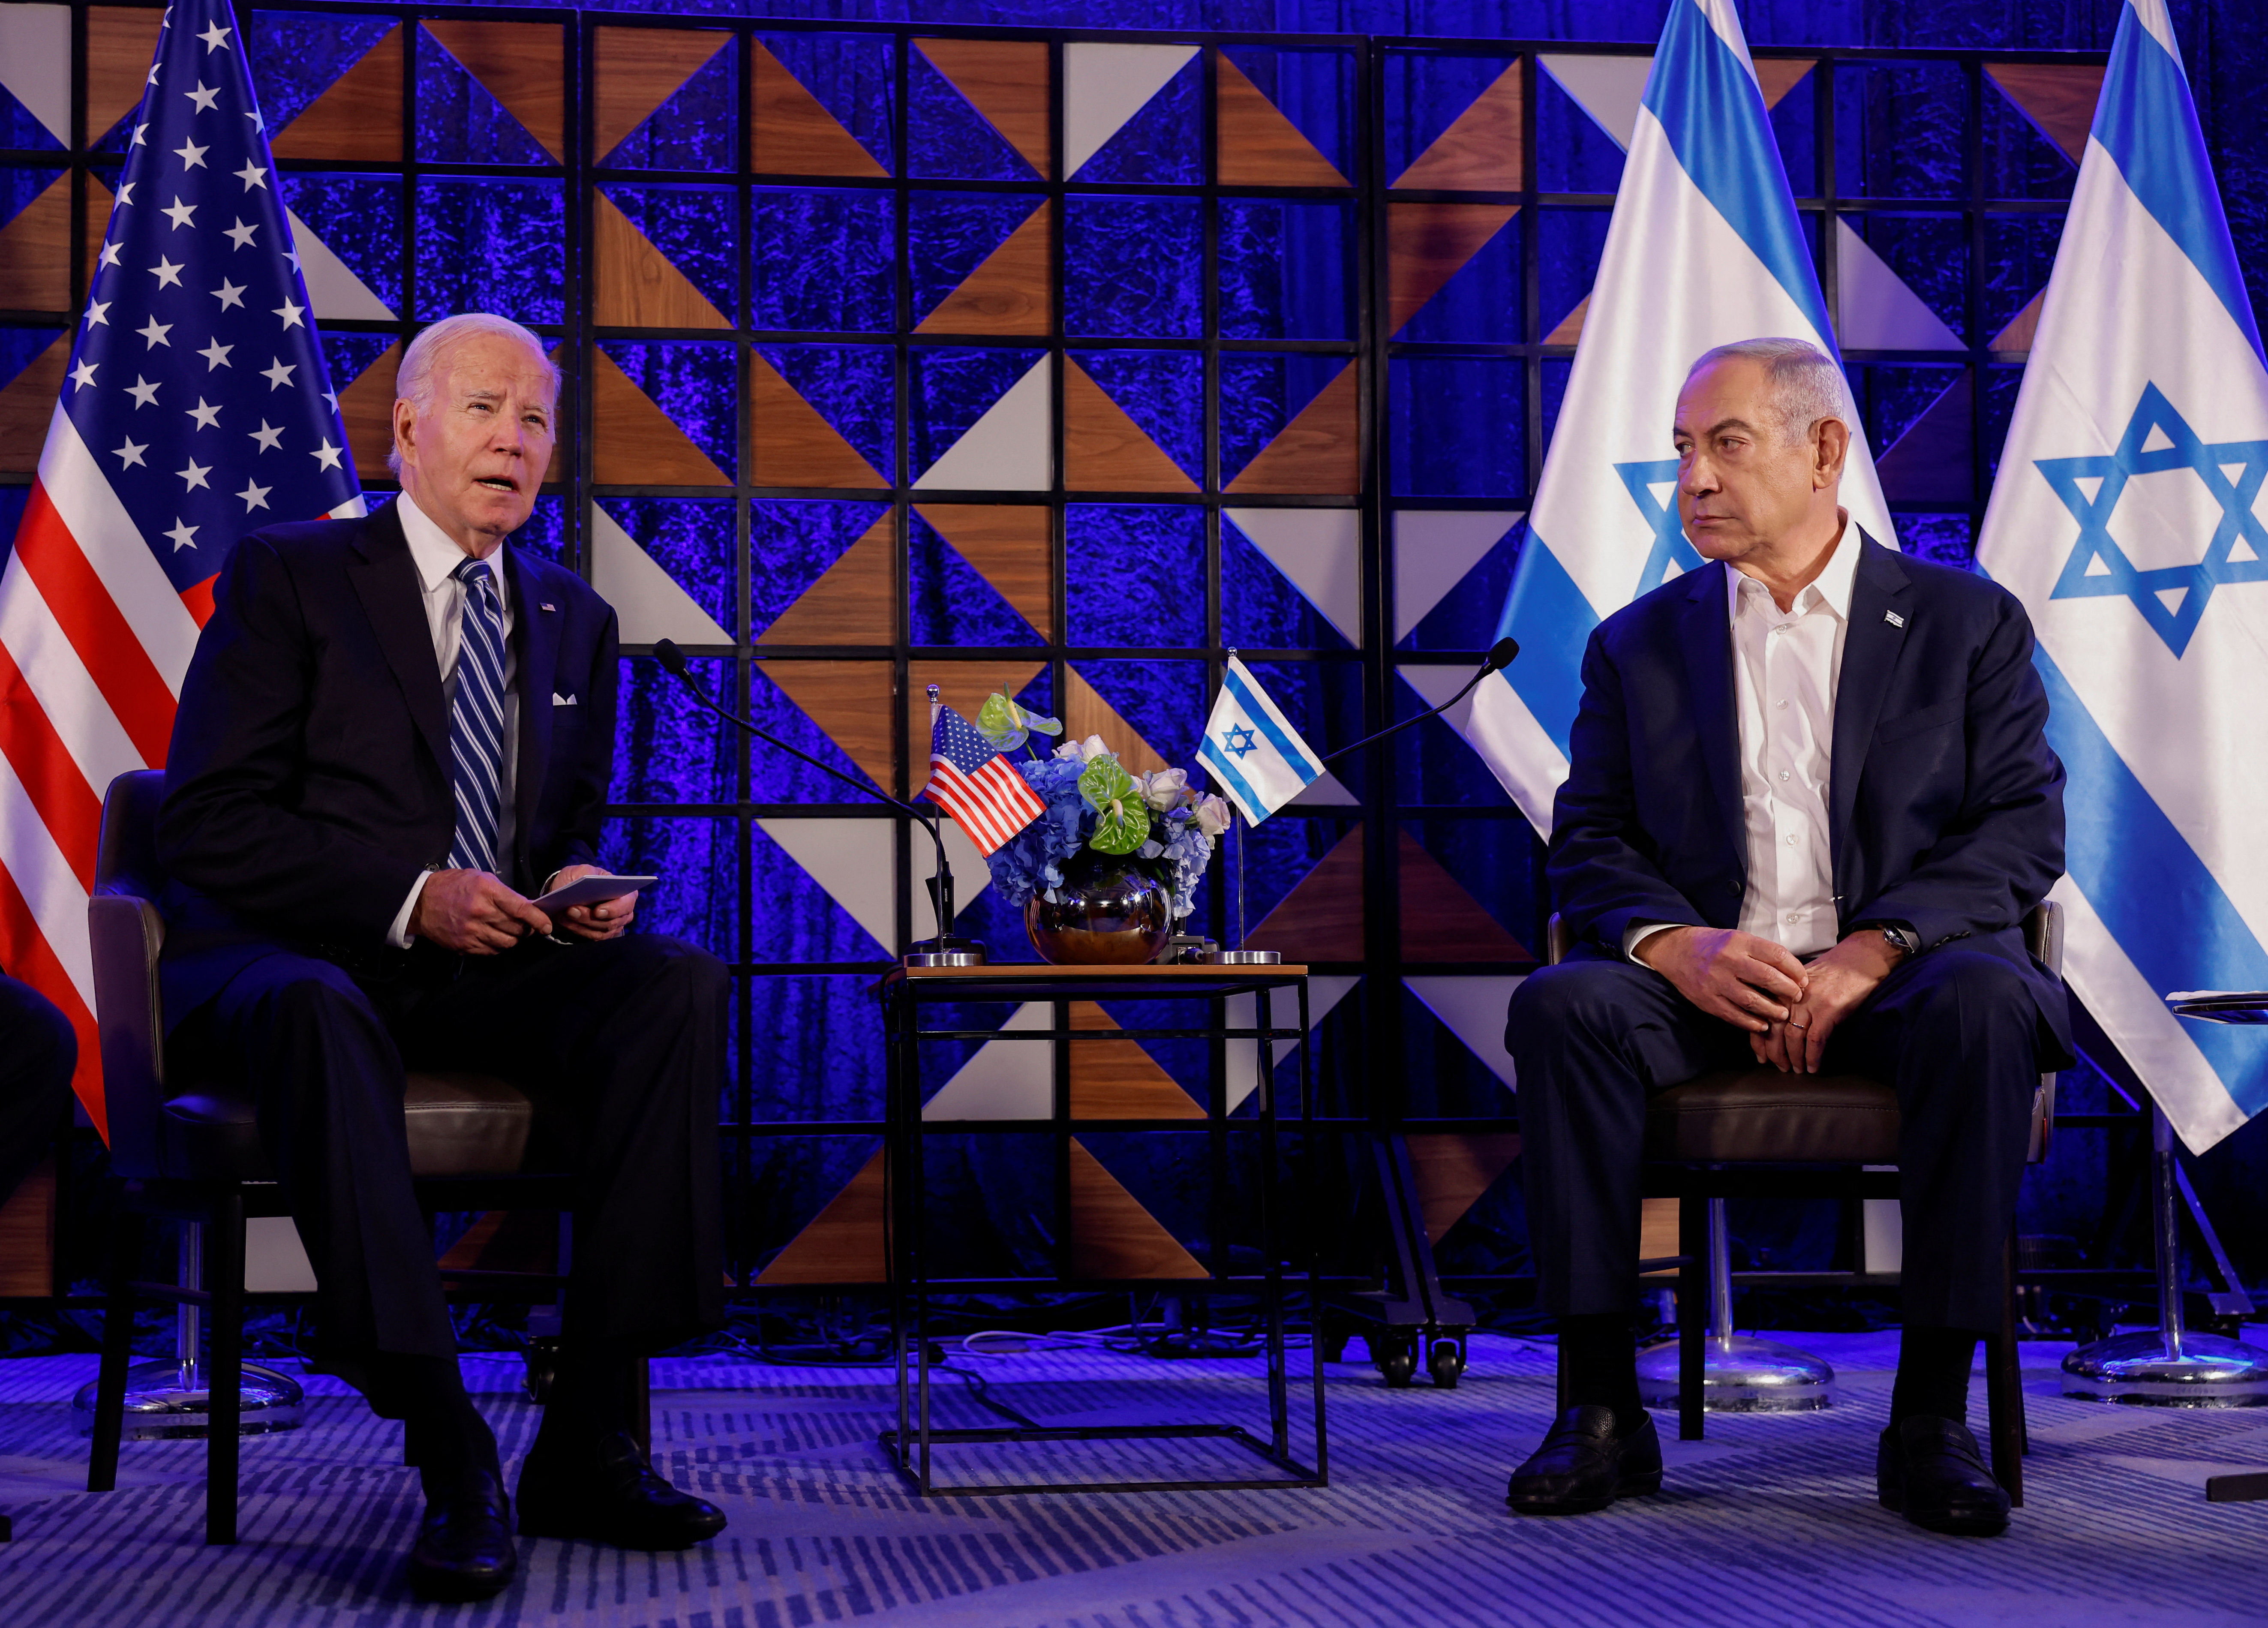 Biden lands in Israel, hugs Netanyahu and Herzog on tarmac | Reuters